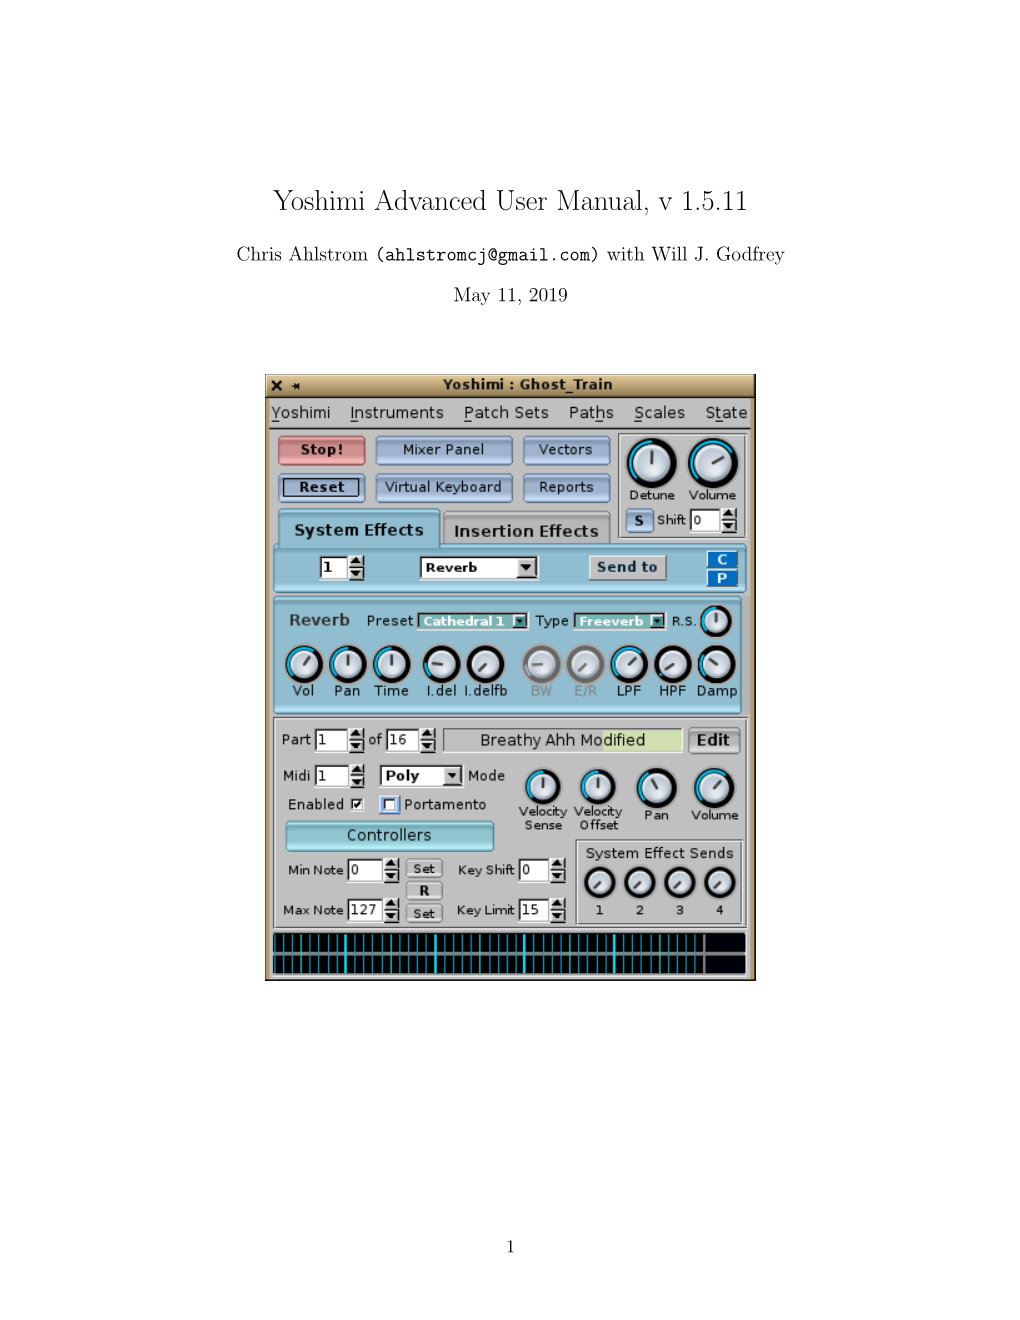 Yoshimi Advanced User Manual, V 1.5.11